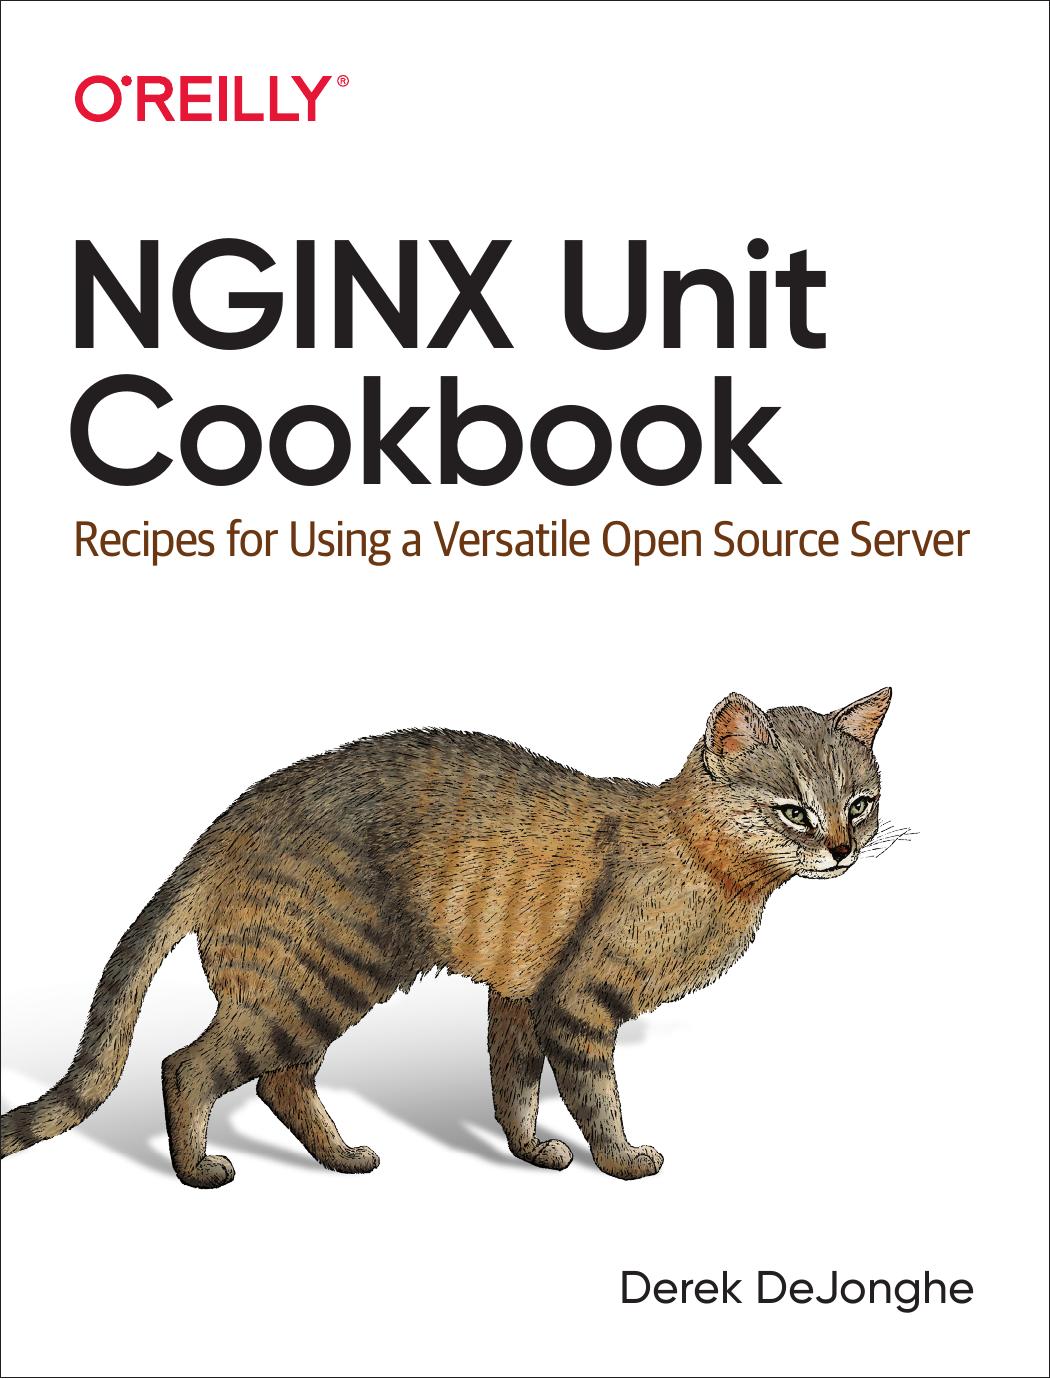 NGINX Unit Cookbook by Derek DeJonghe